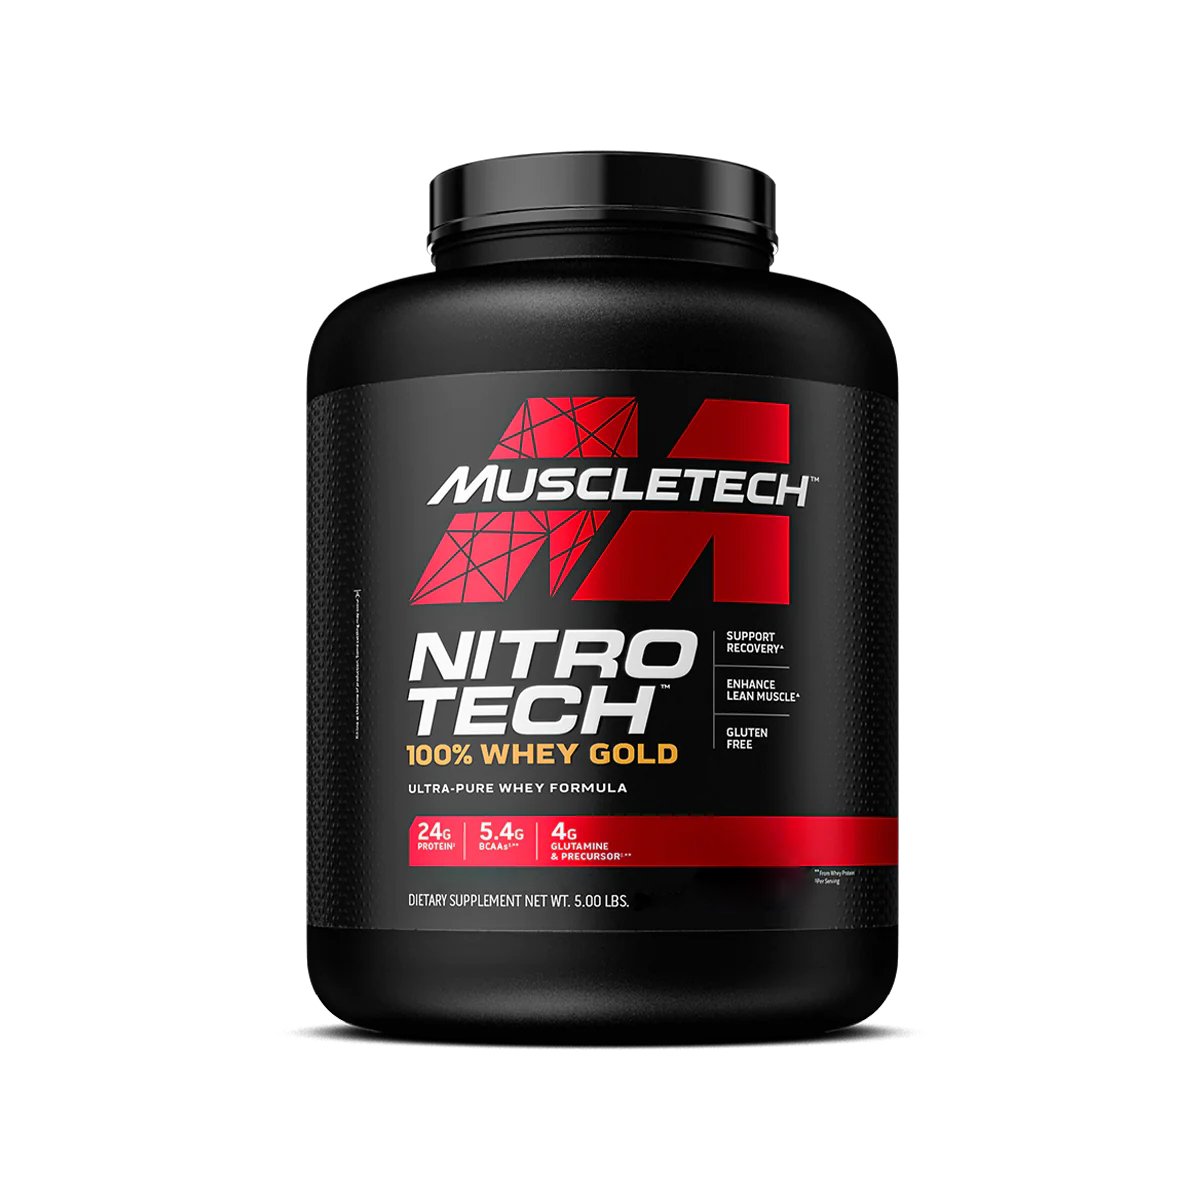 Протеин Muscletech Nitro Tech 100% Whey Gold, 2.27 кг Френч ваниль,  ml, MuscleTech. Protein. Mass Gain recovery Anti-catabolic properties 